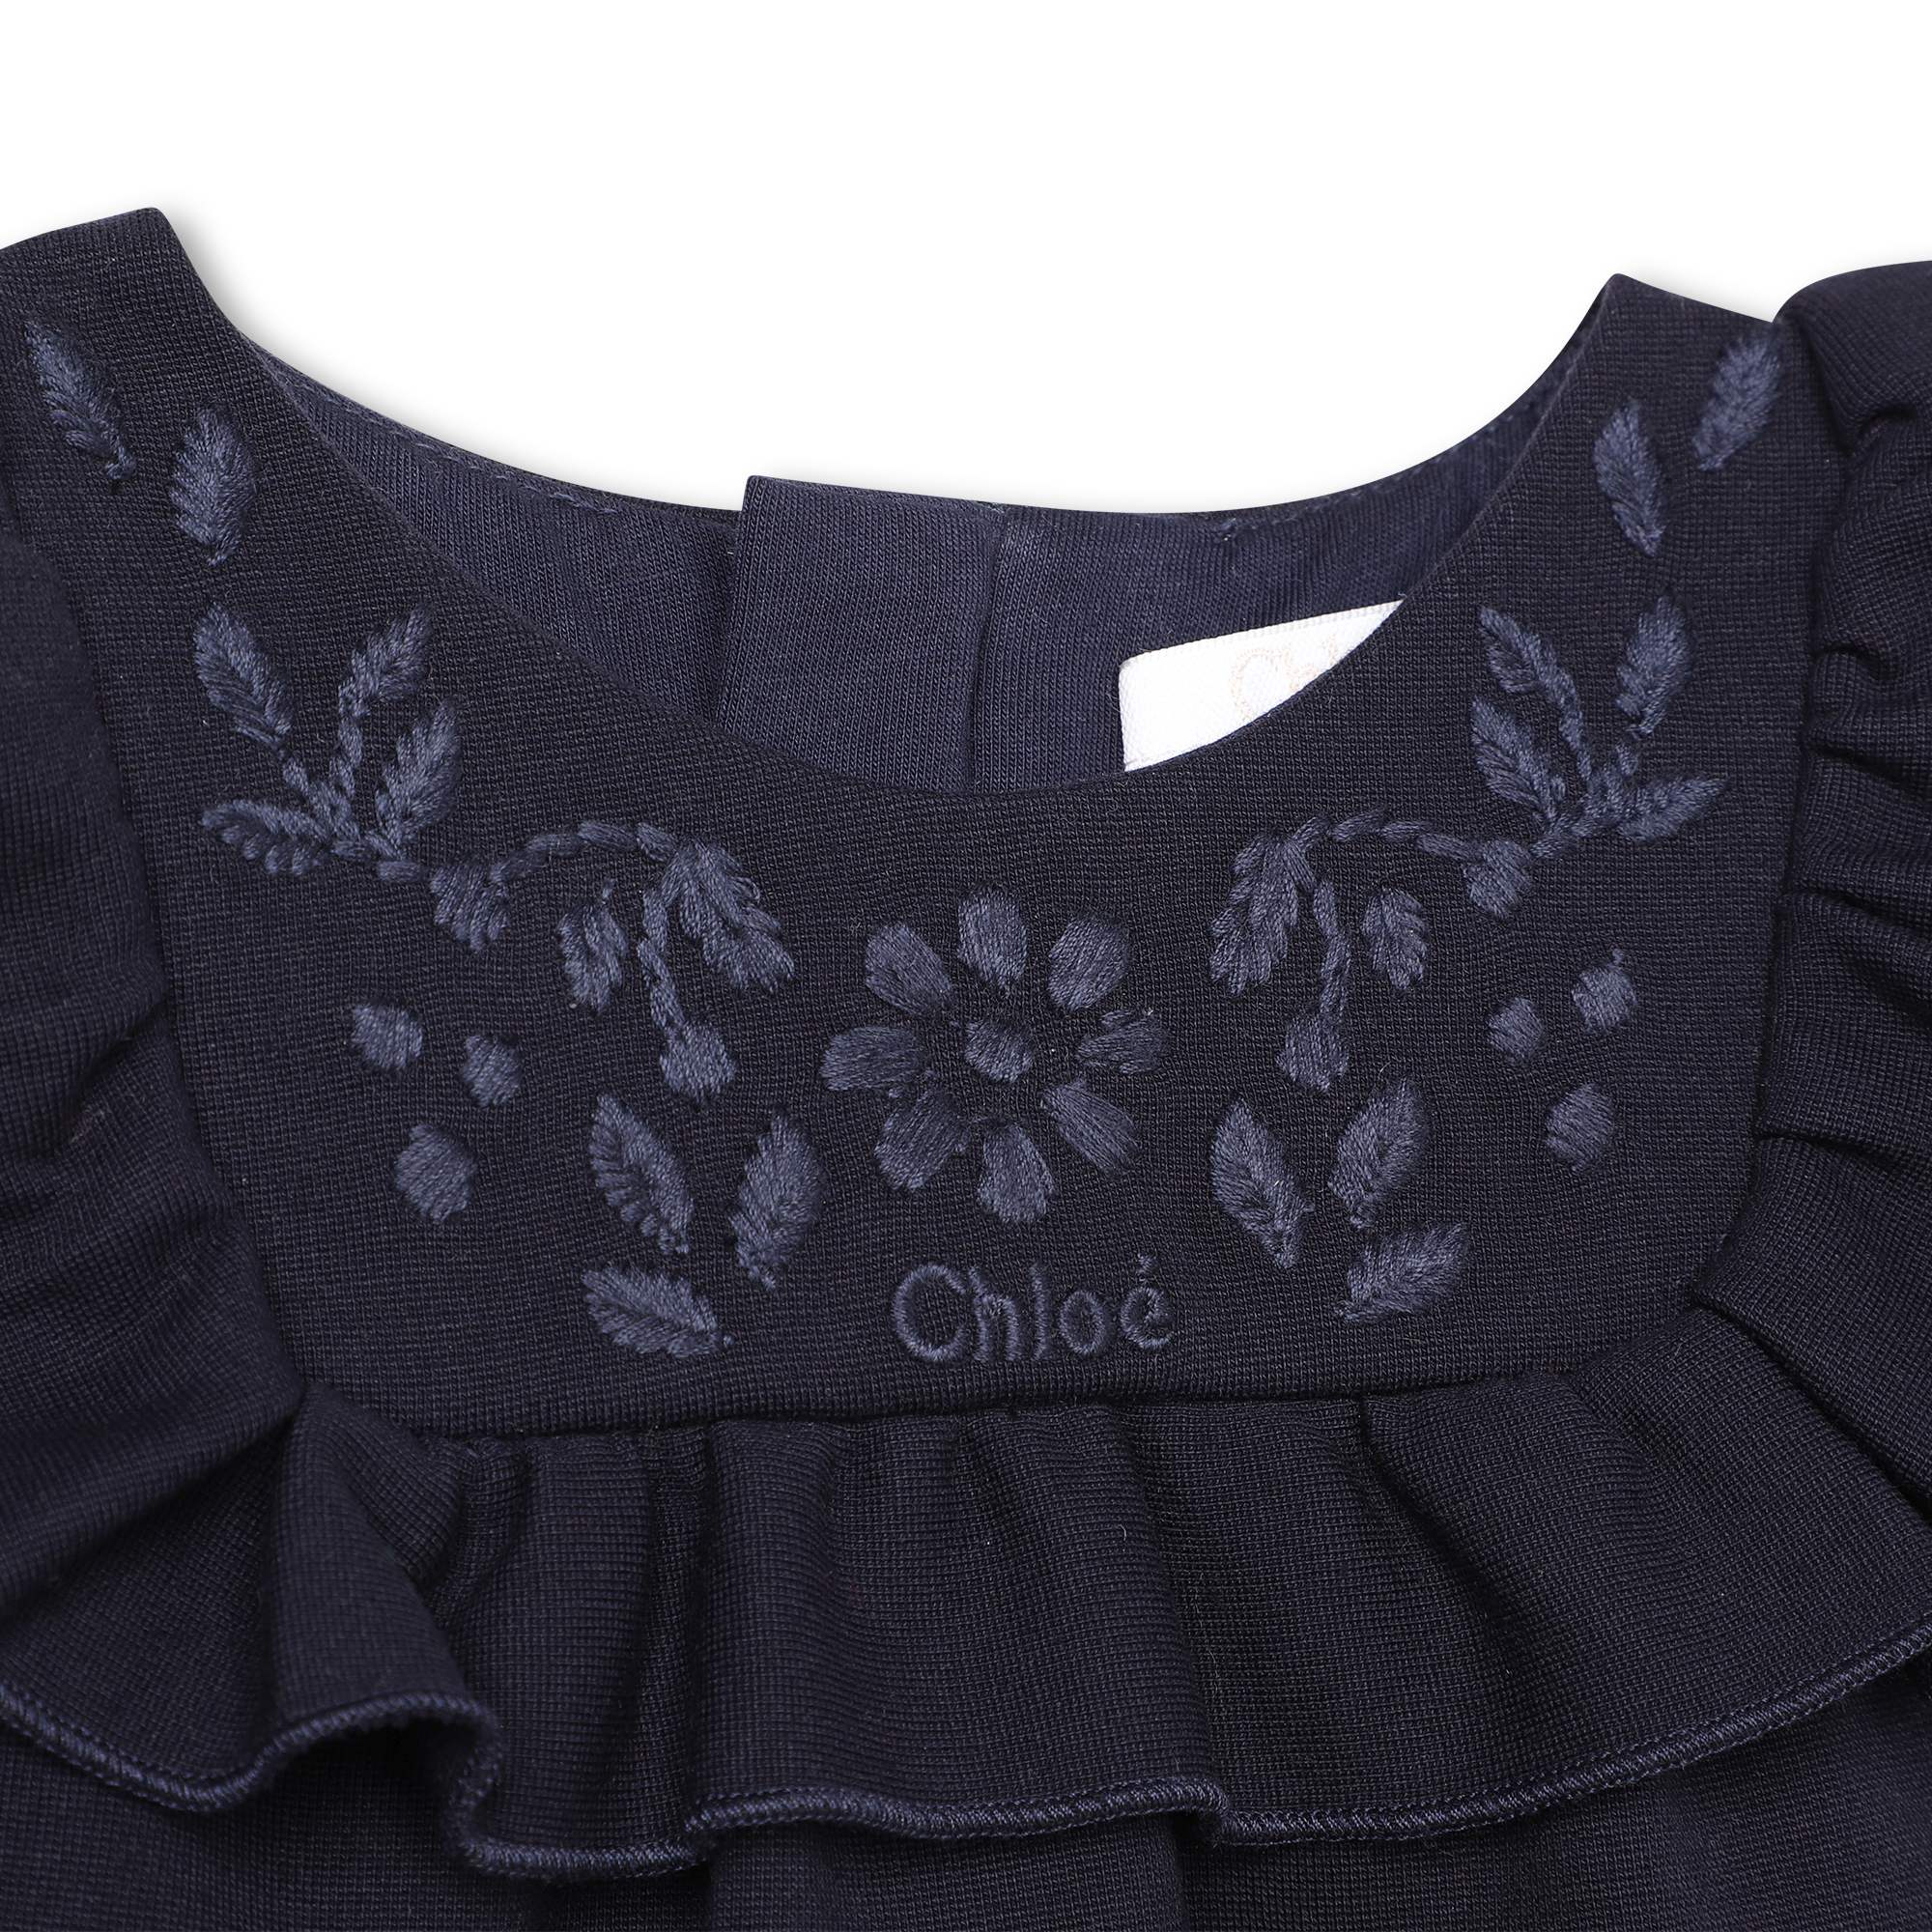 Chloe Baby Girls Knitted Dress in Navy